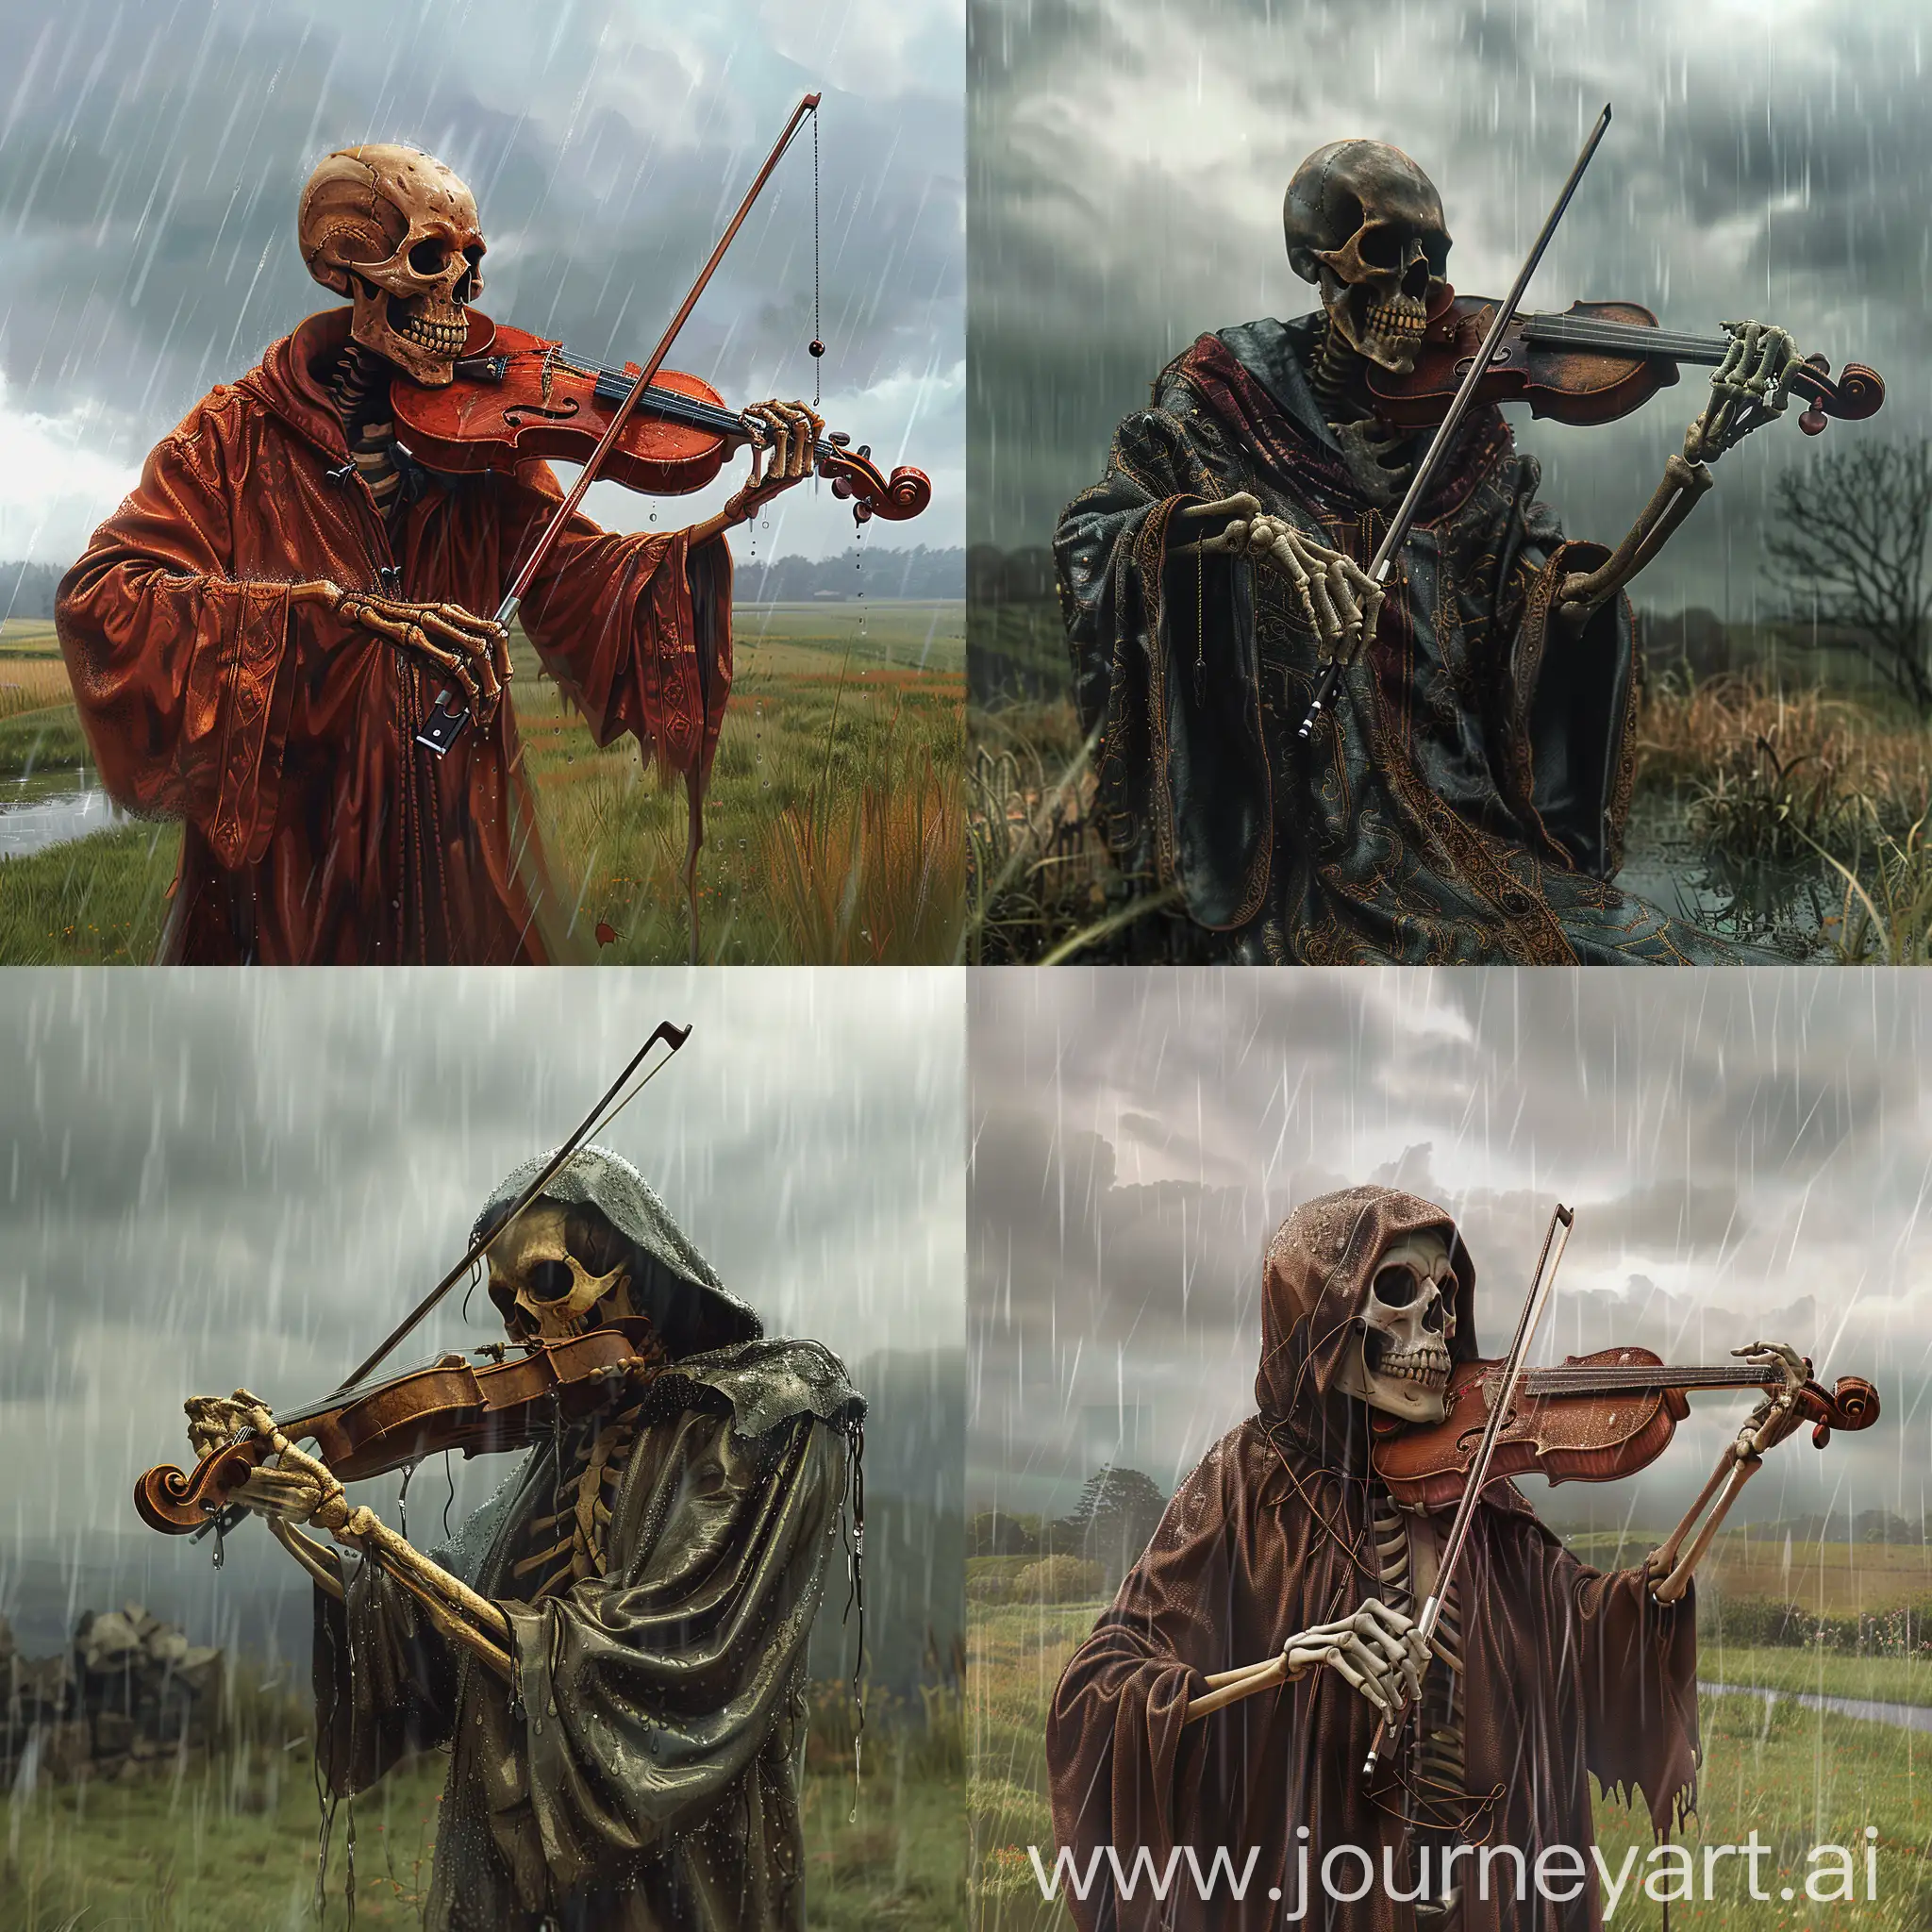 Terrifying-Skeleton-Bard-Playing-Violin-in-Rainy-Fantasy-Field